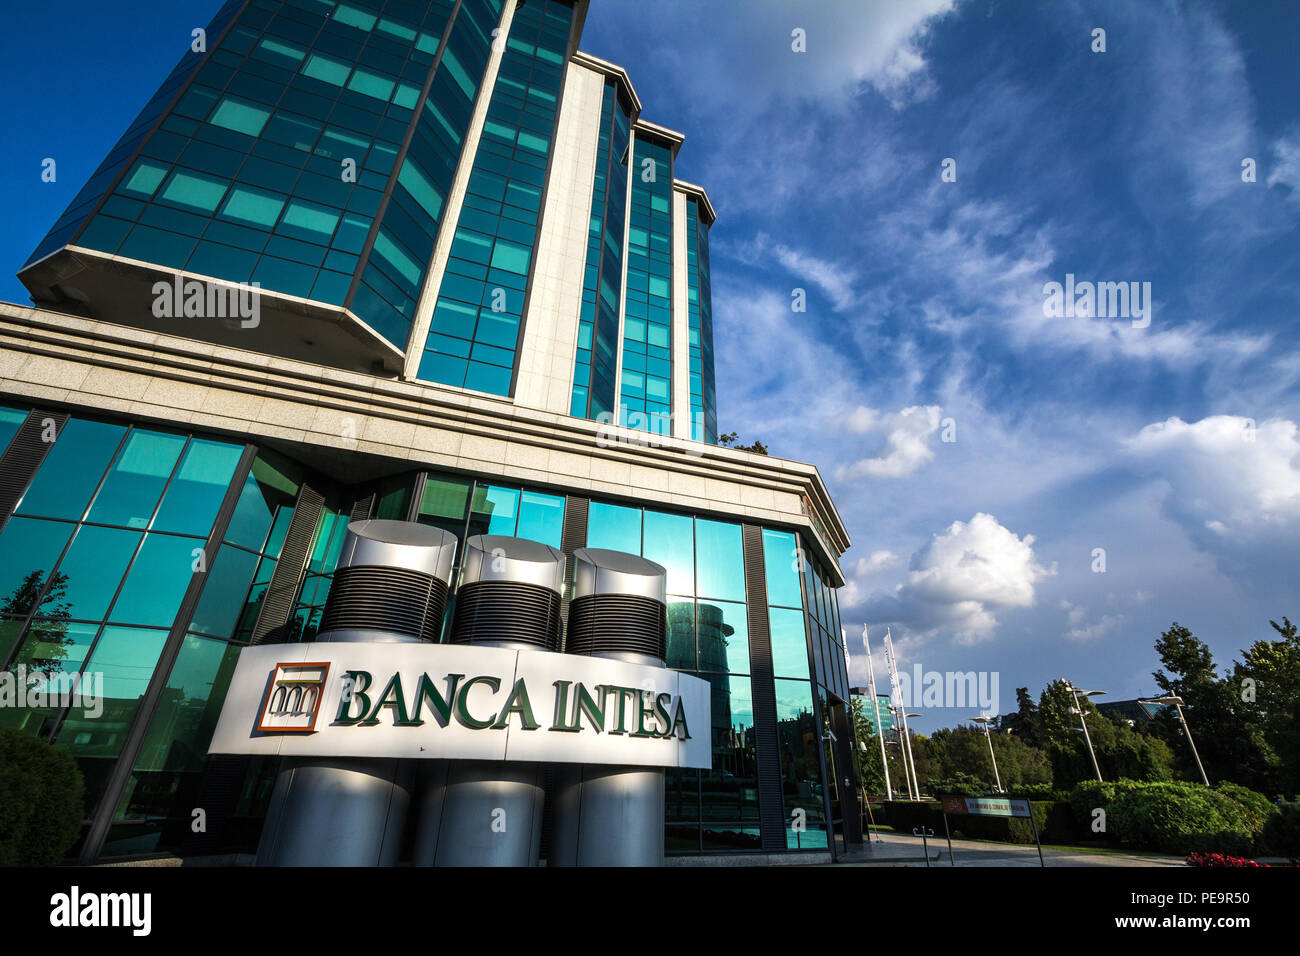 Intesa bank hi-res stock photography and images - Alamy